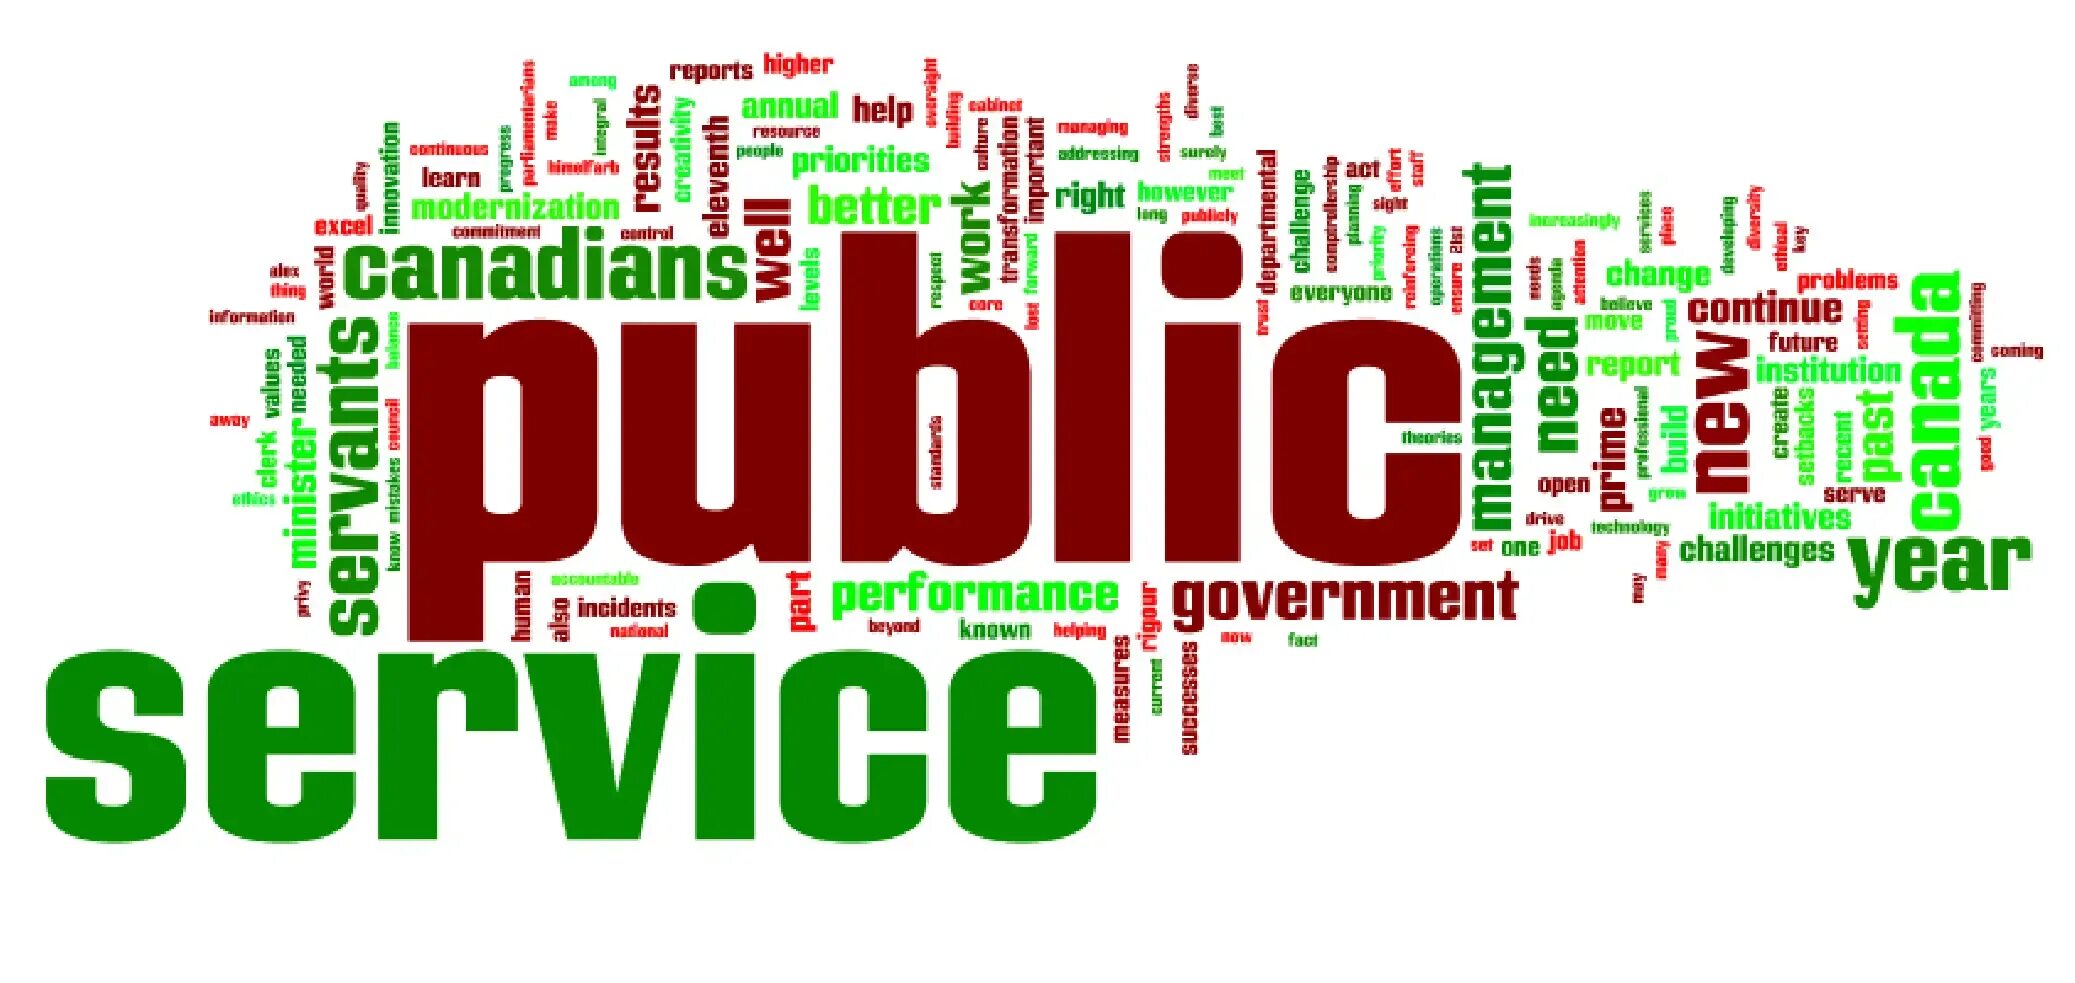 Public 1.0. Public services. Public services рисунки. Public government картинки. Слово public.